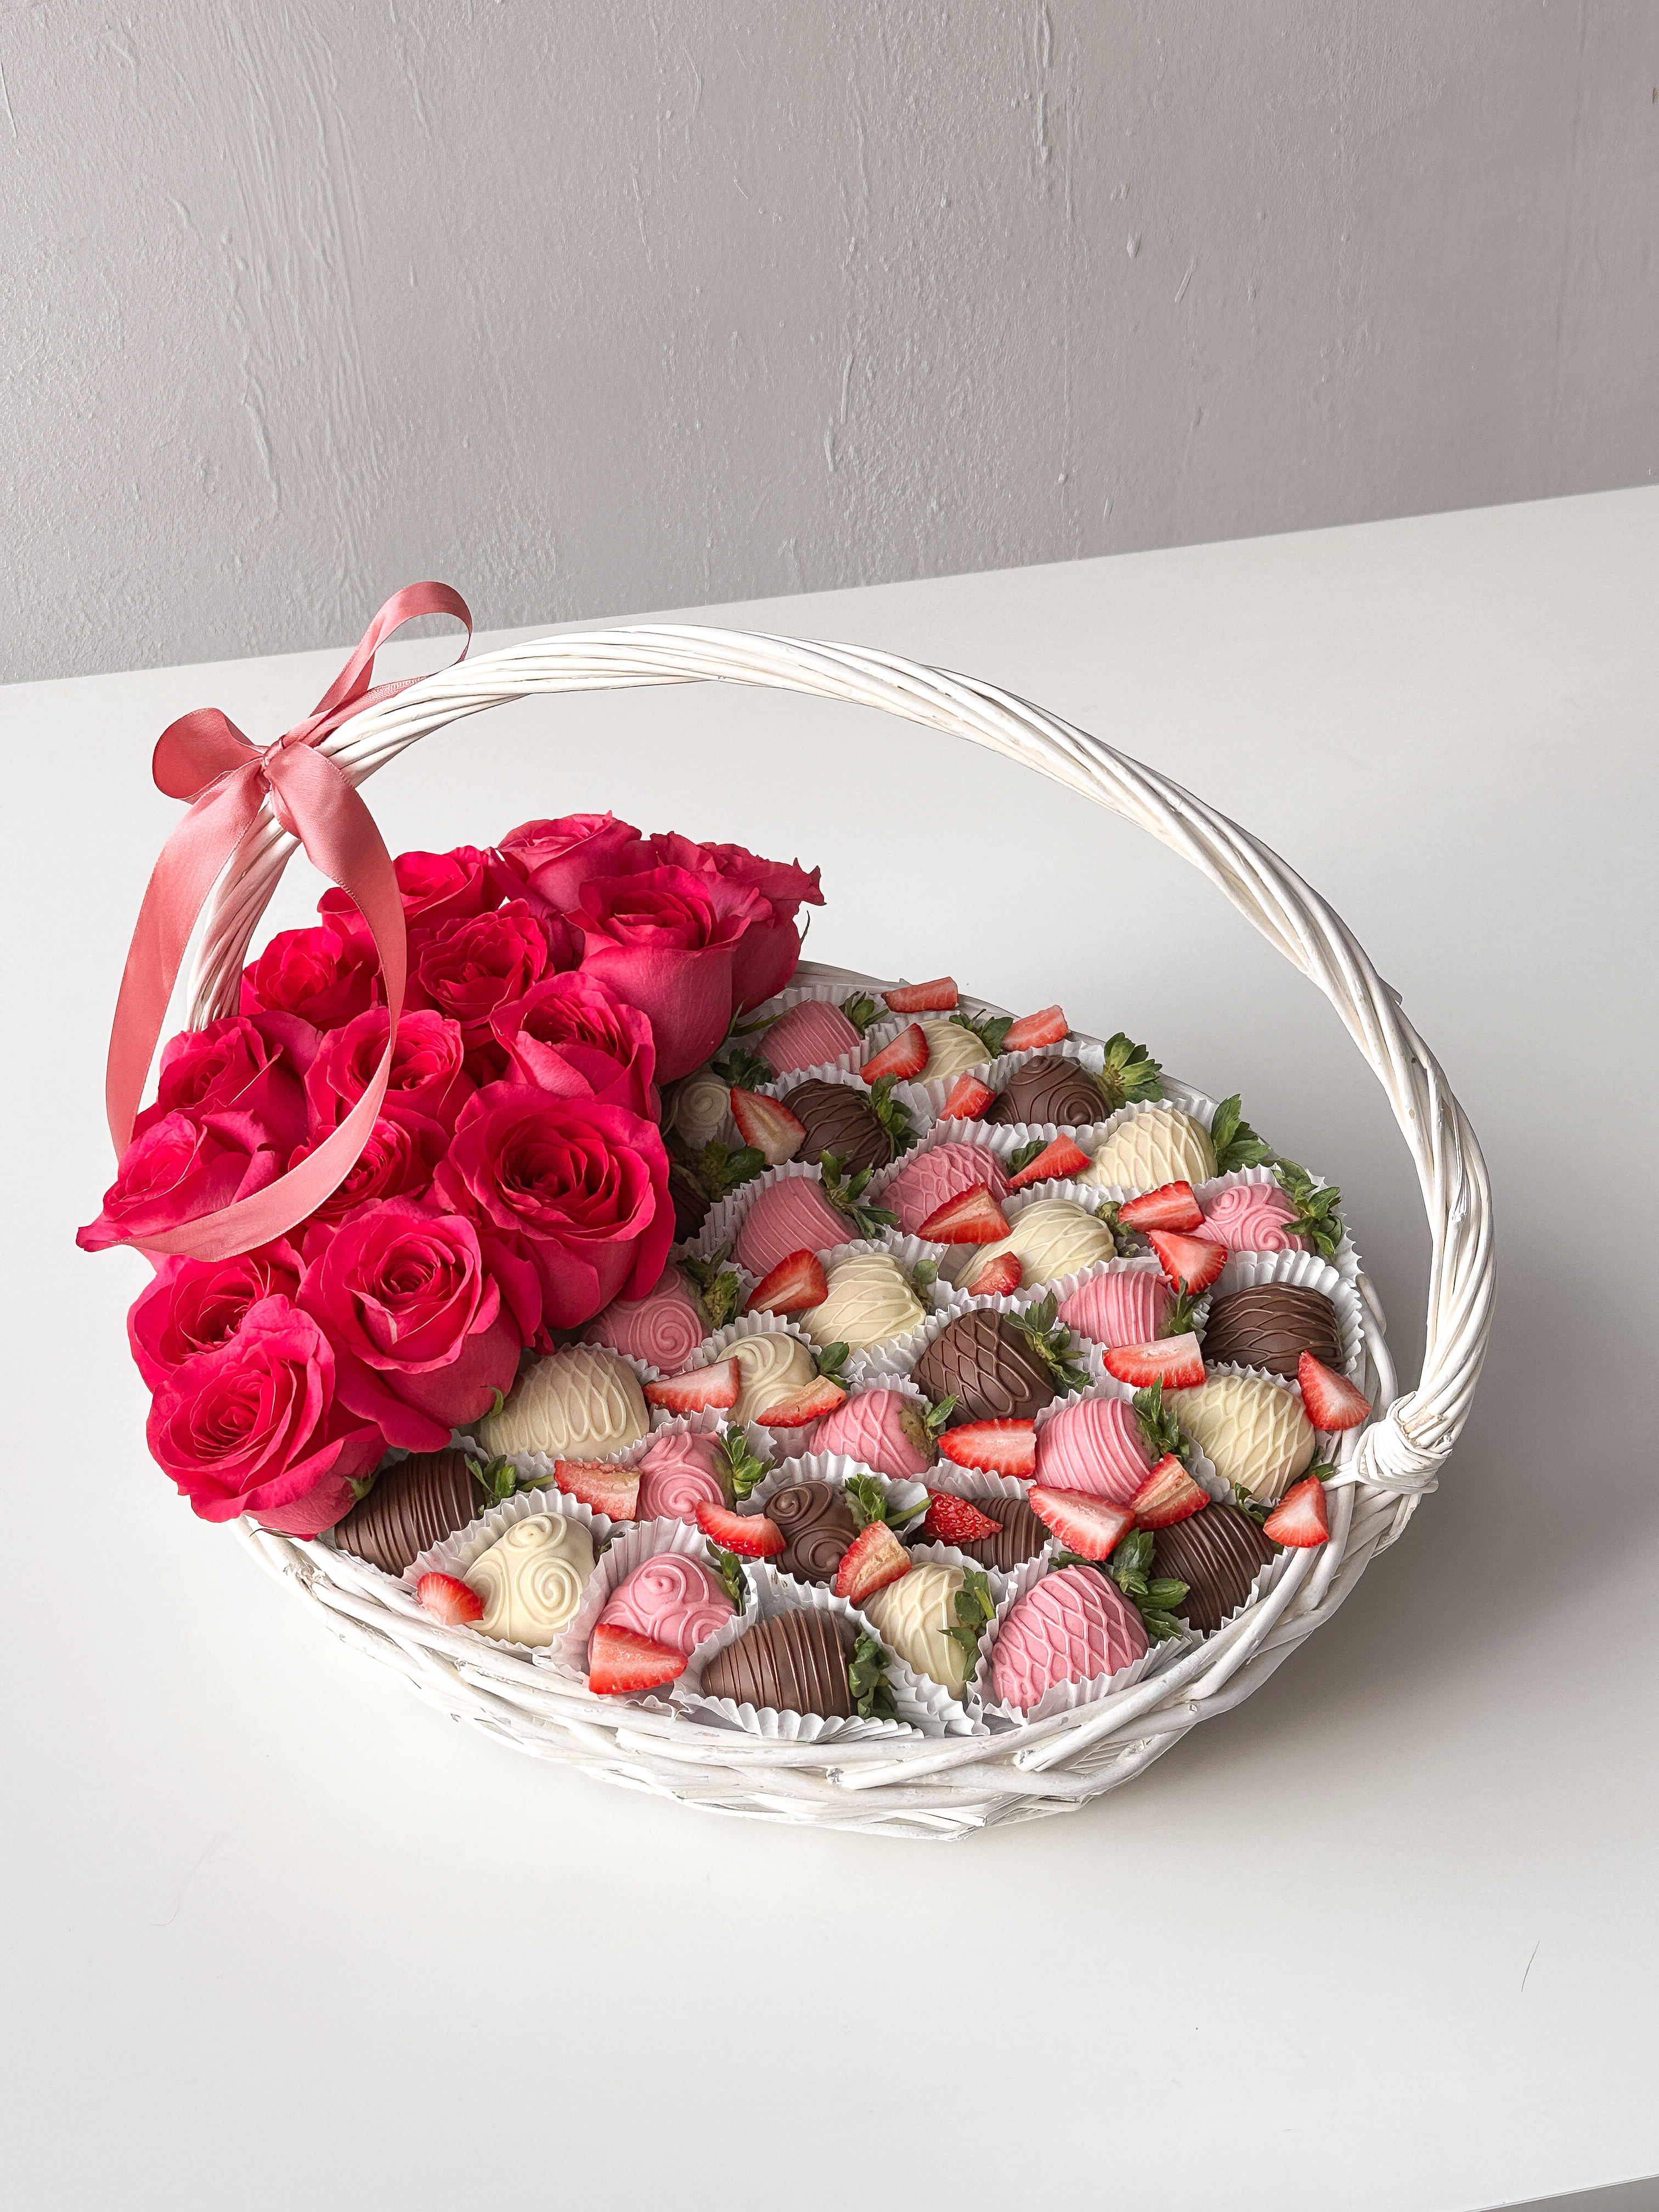 Клубничная корзина "Фуксия" из клубники в шоколаде и голландских роз